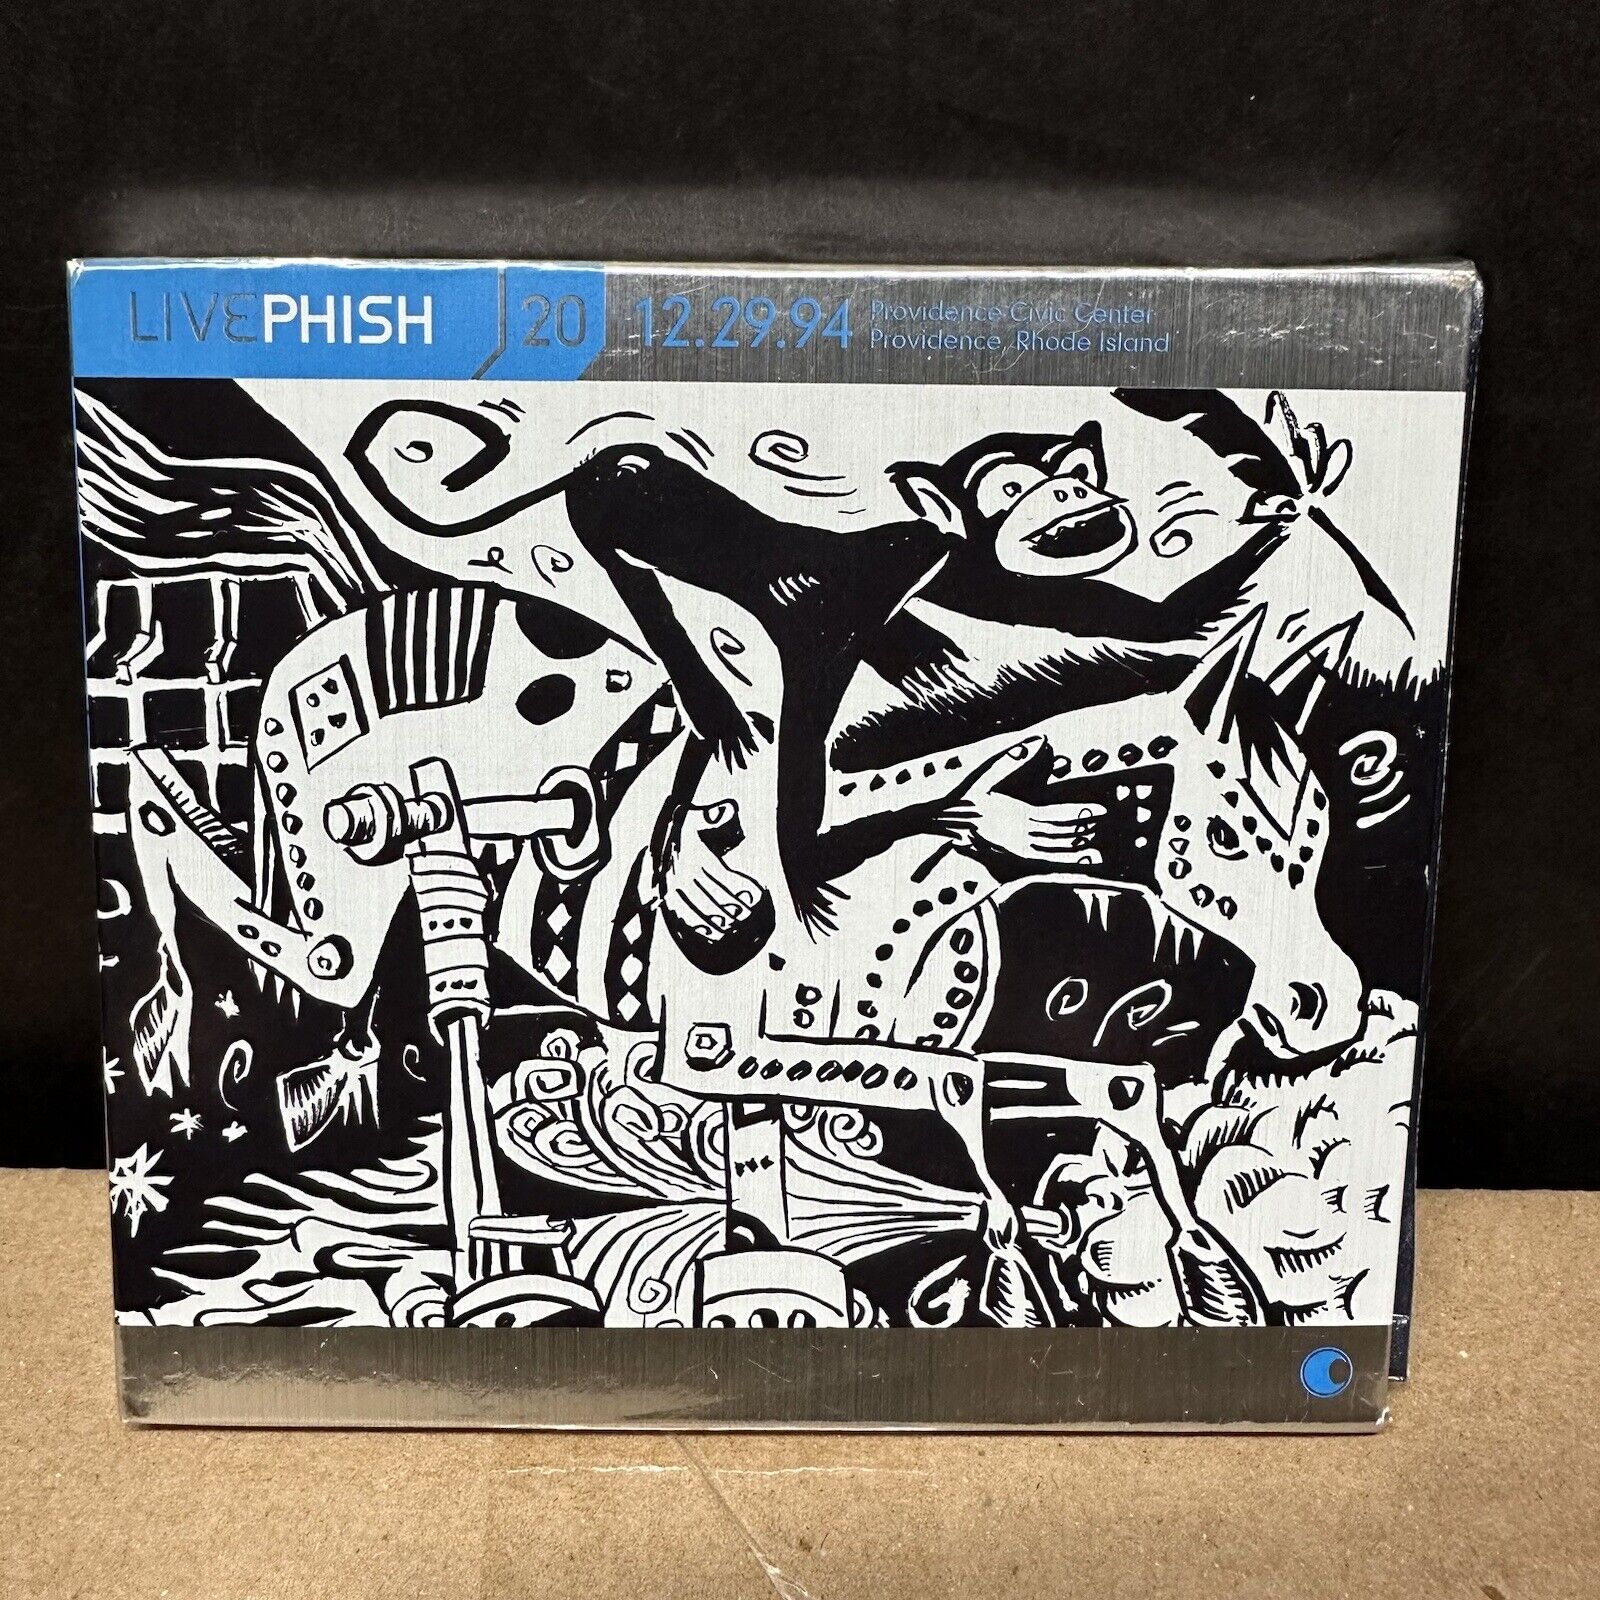 CD Live Phish 20 12.29.94 Providence Civic Center Providence RI Elektra 2003